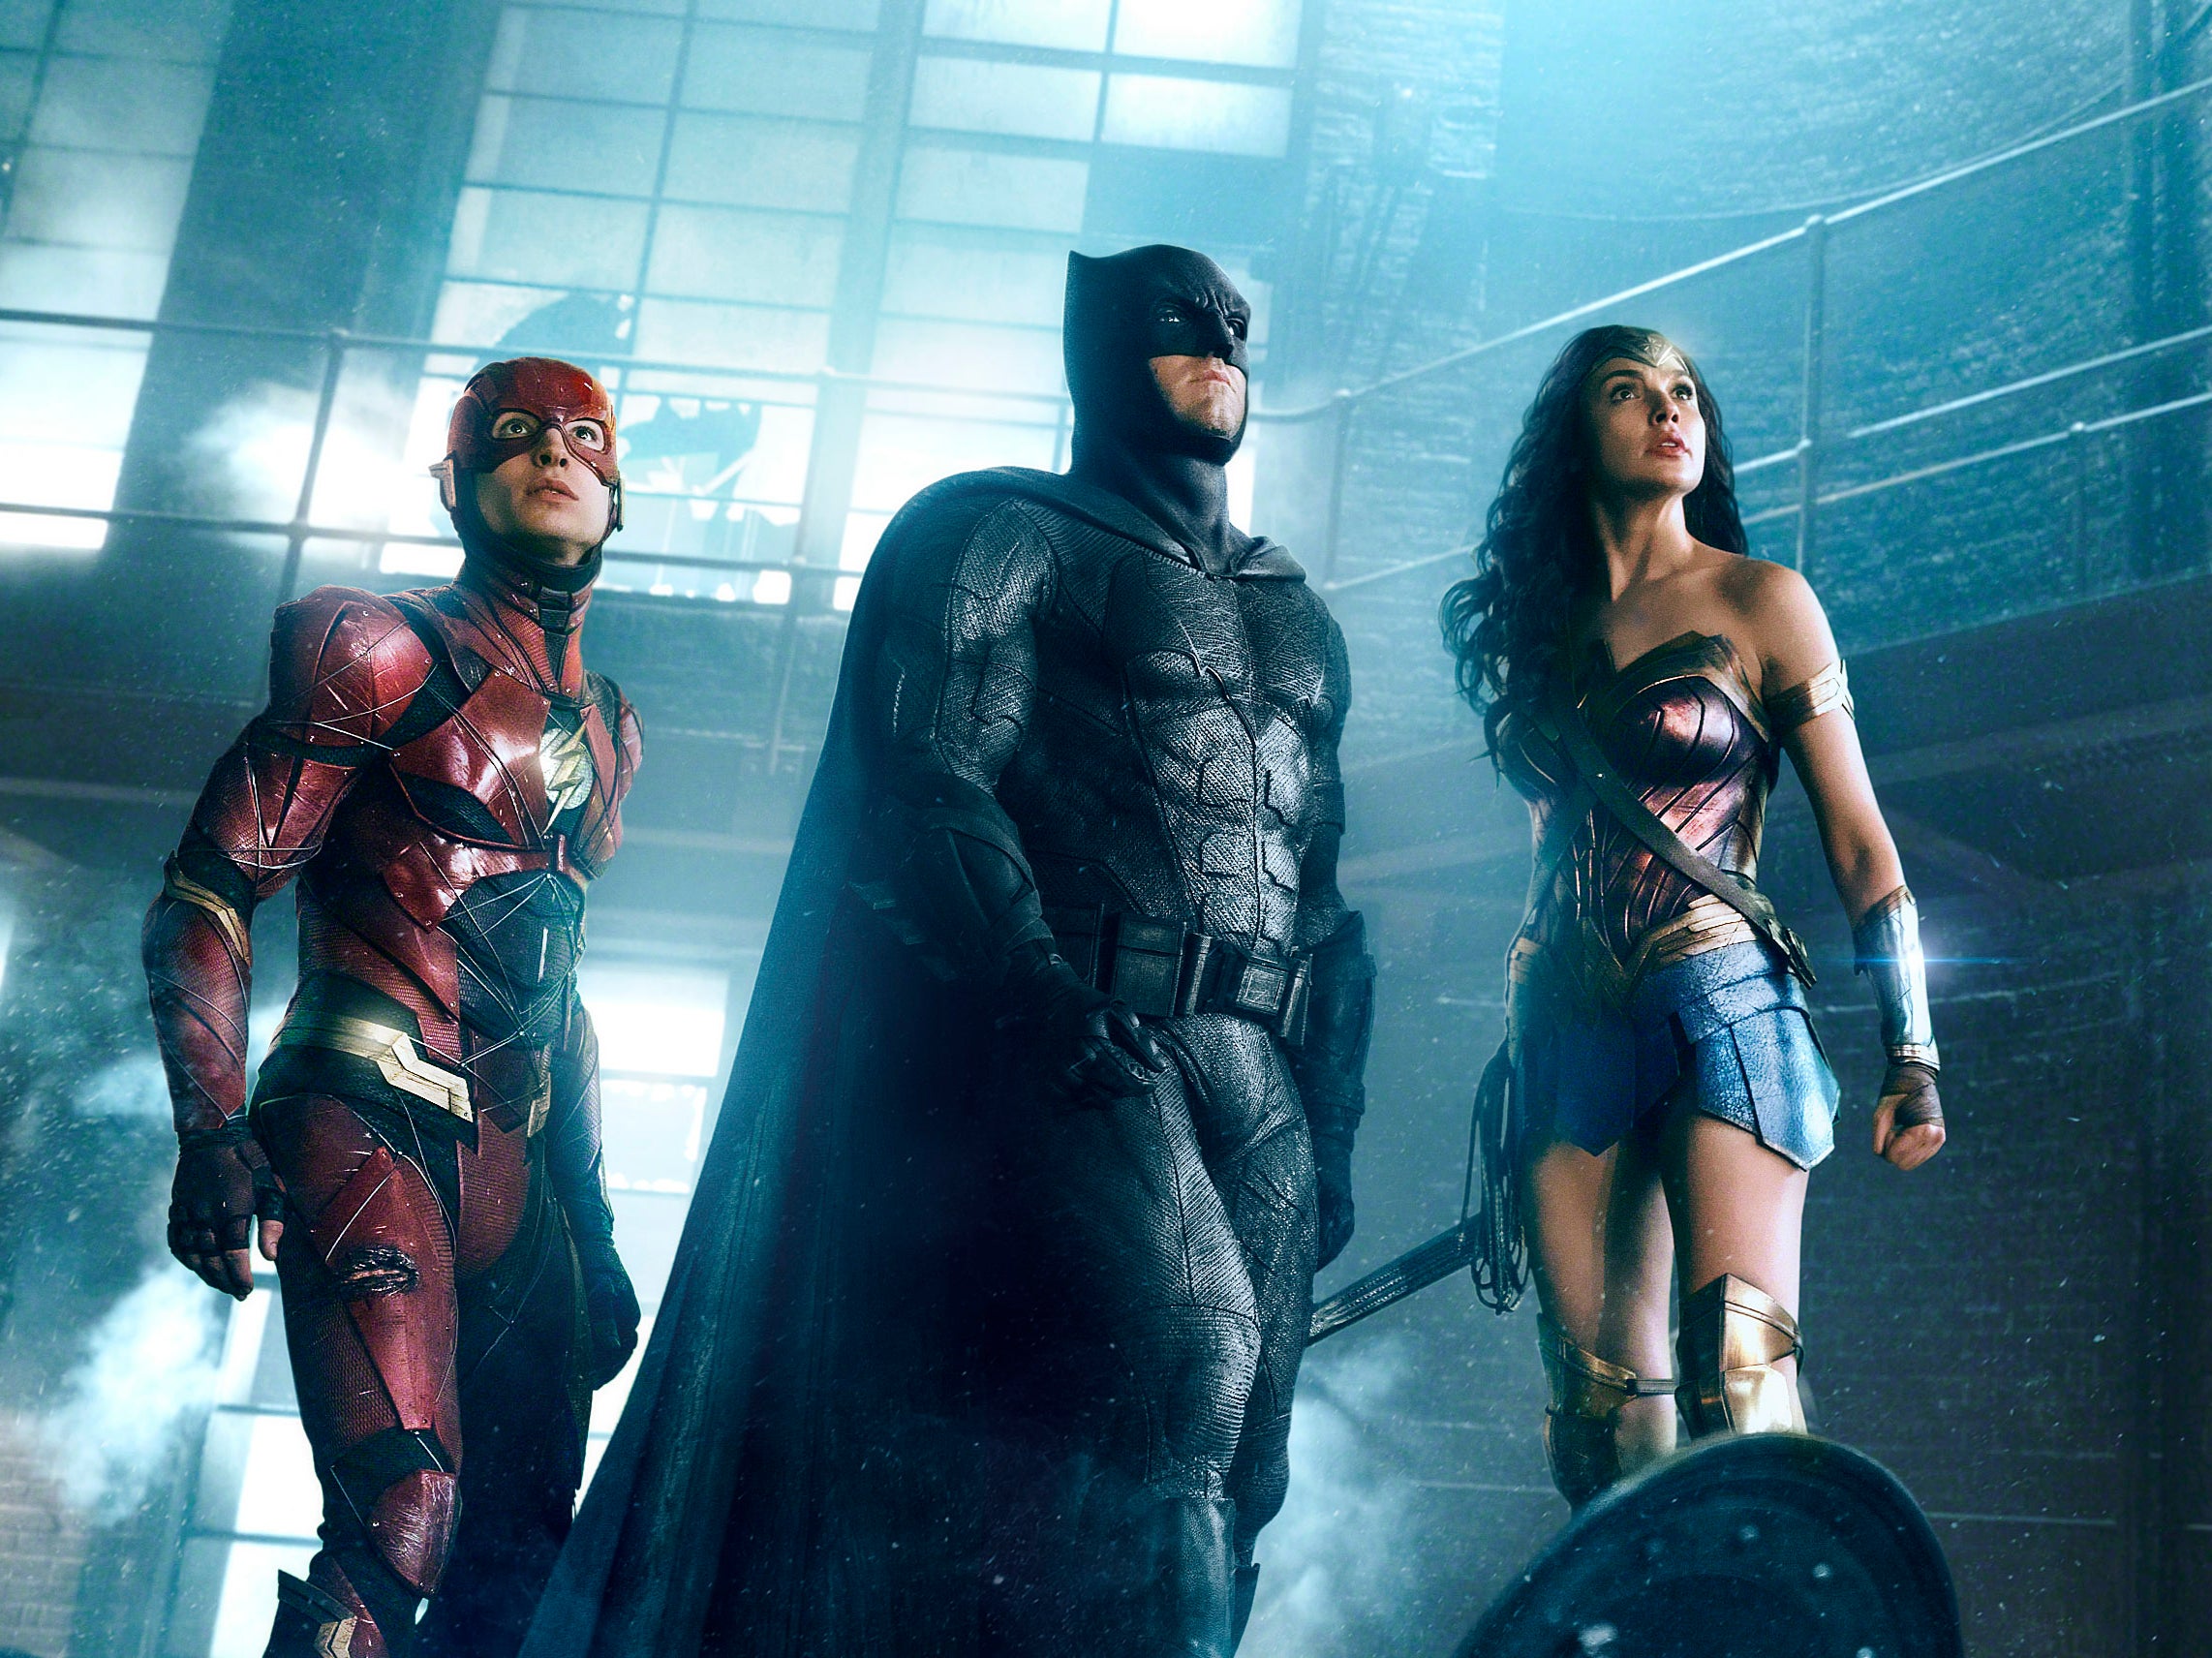 The Flash (Ezra Miller), Batman (Ben Affleck) and Wonder Woman (Gal Gadot) in ‘Zack Snyder’s Justice League’